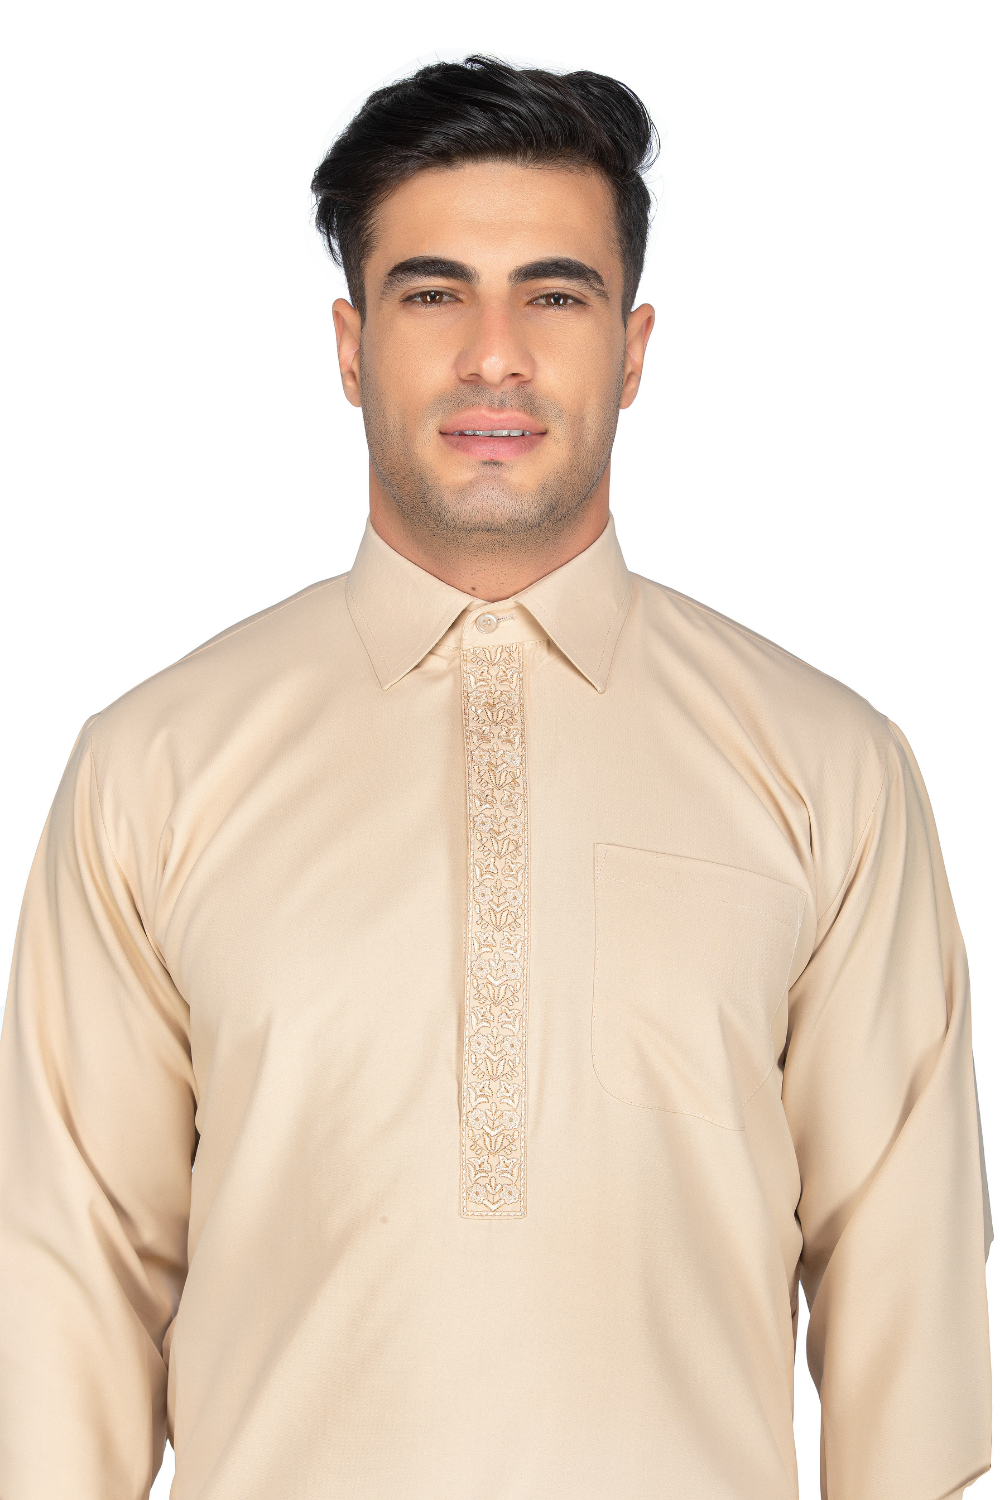 Comortable soft beige kurta salwar with shirt collar